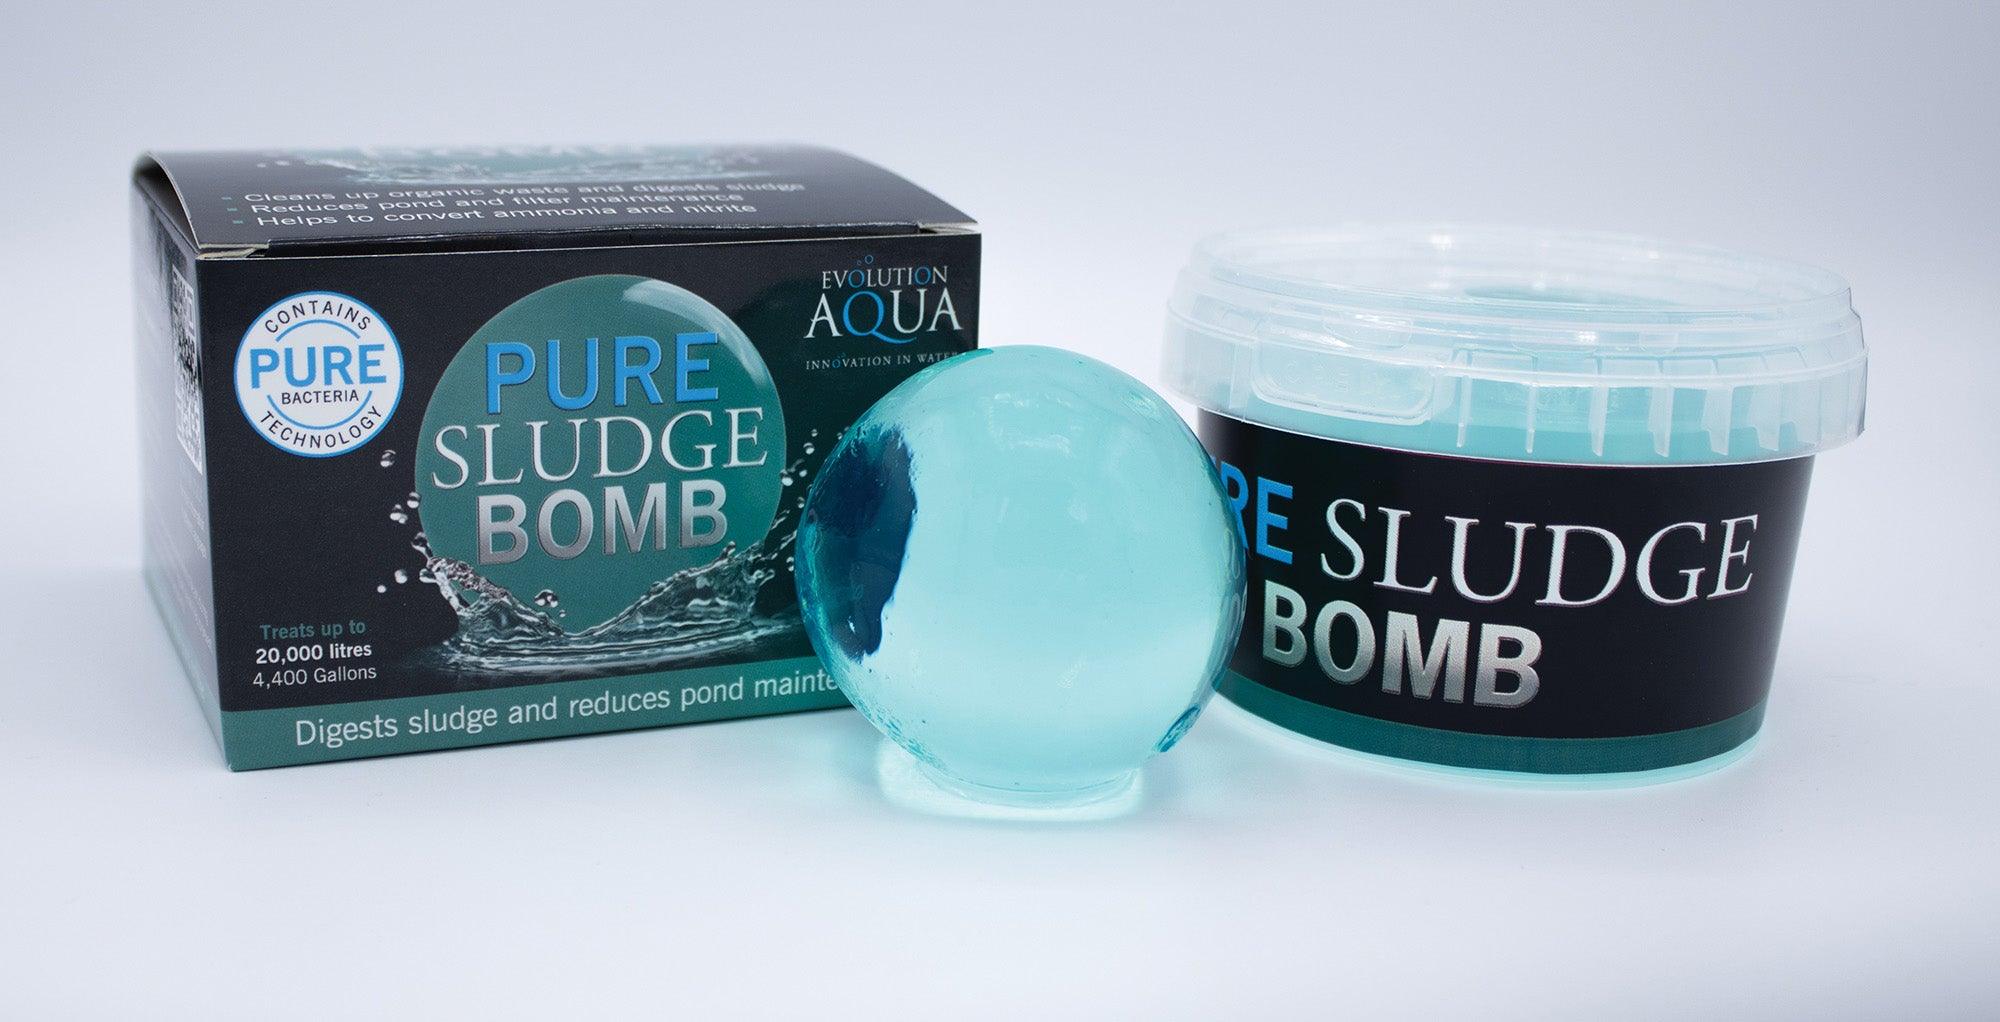 Evolution Aqua Pure Sludge Bomb - Play It Koi